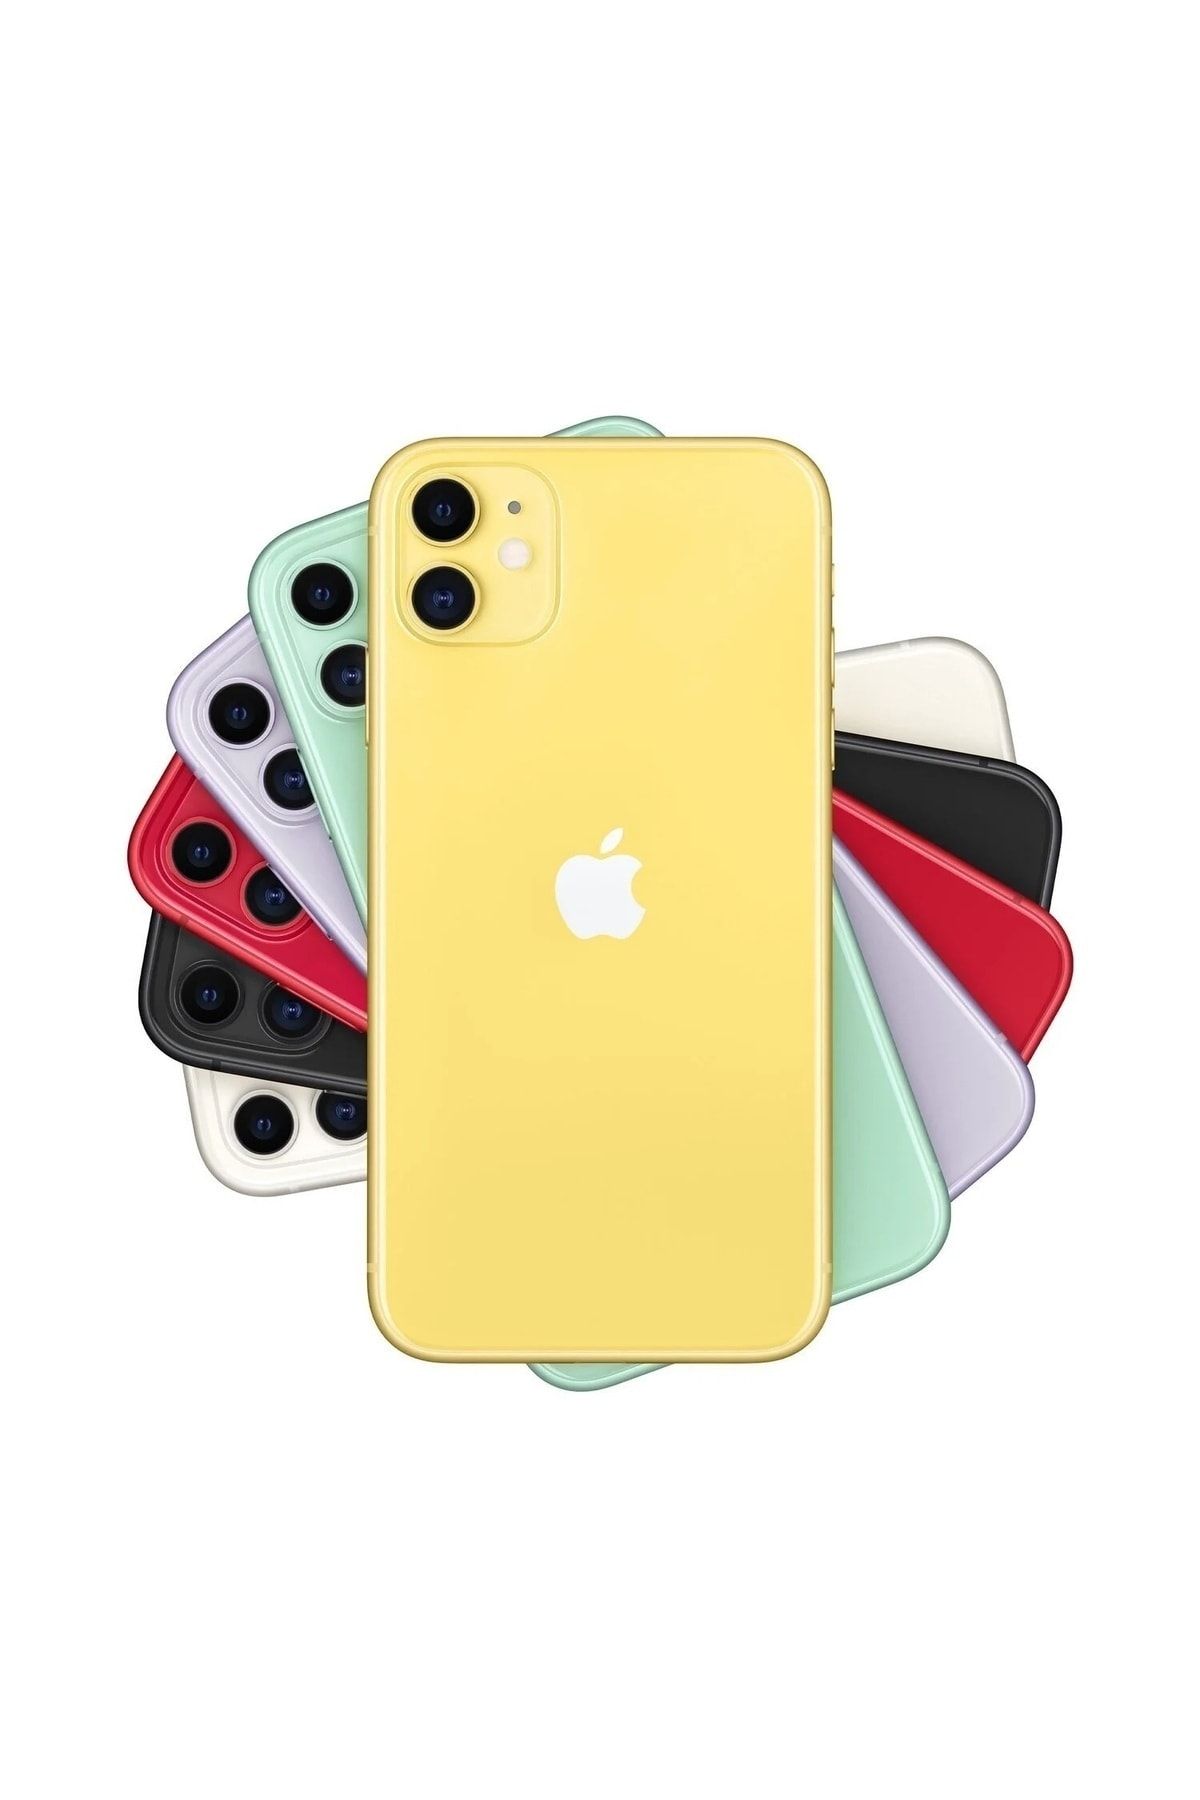 Apple Yenilenmiş Iphone 11 64gb B Grade